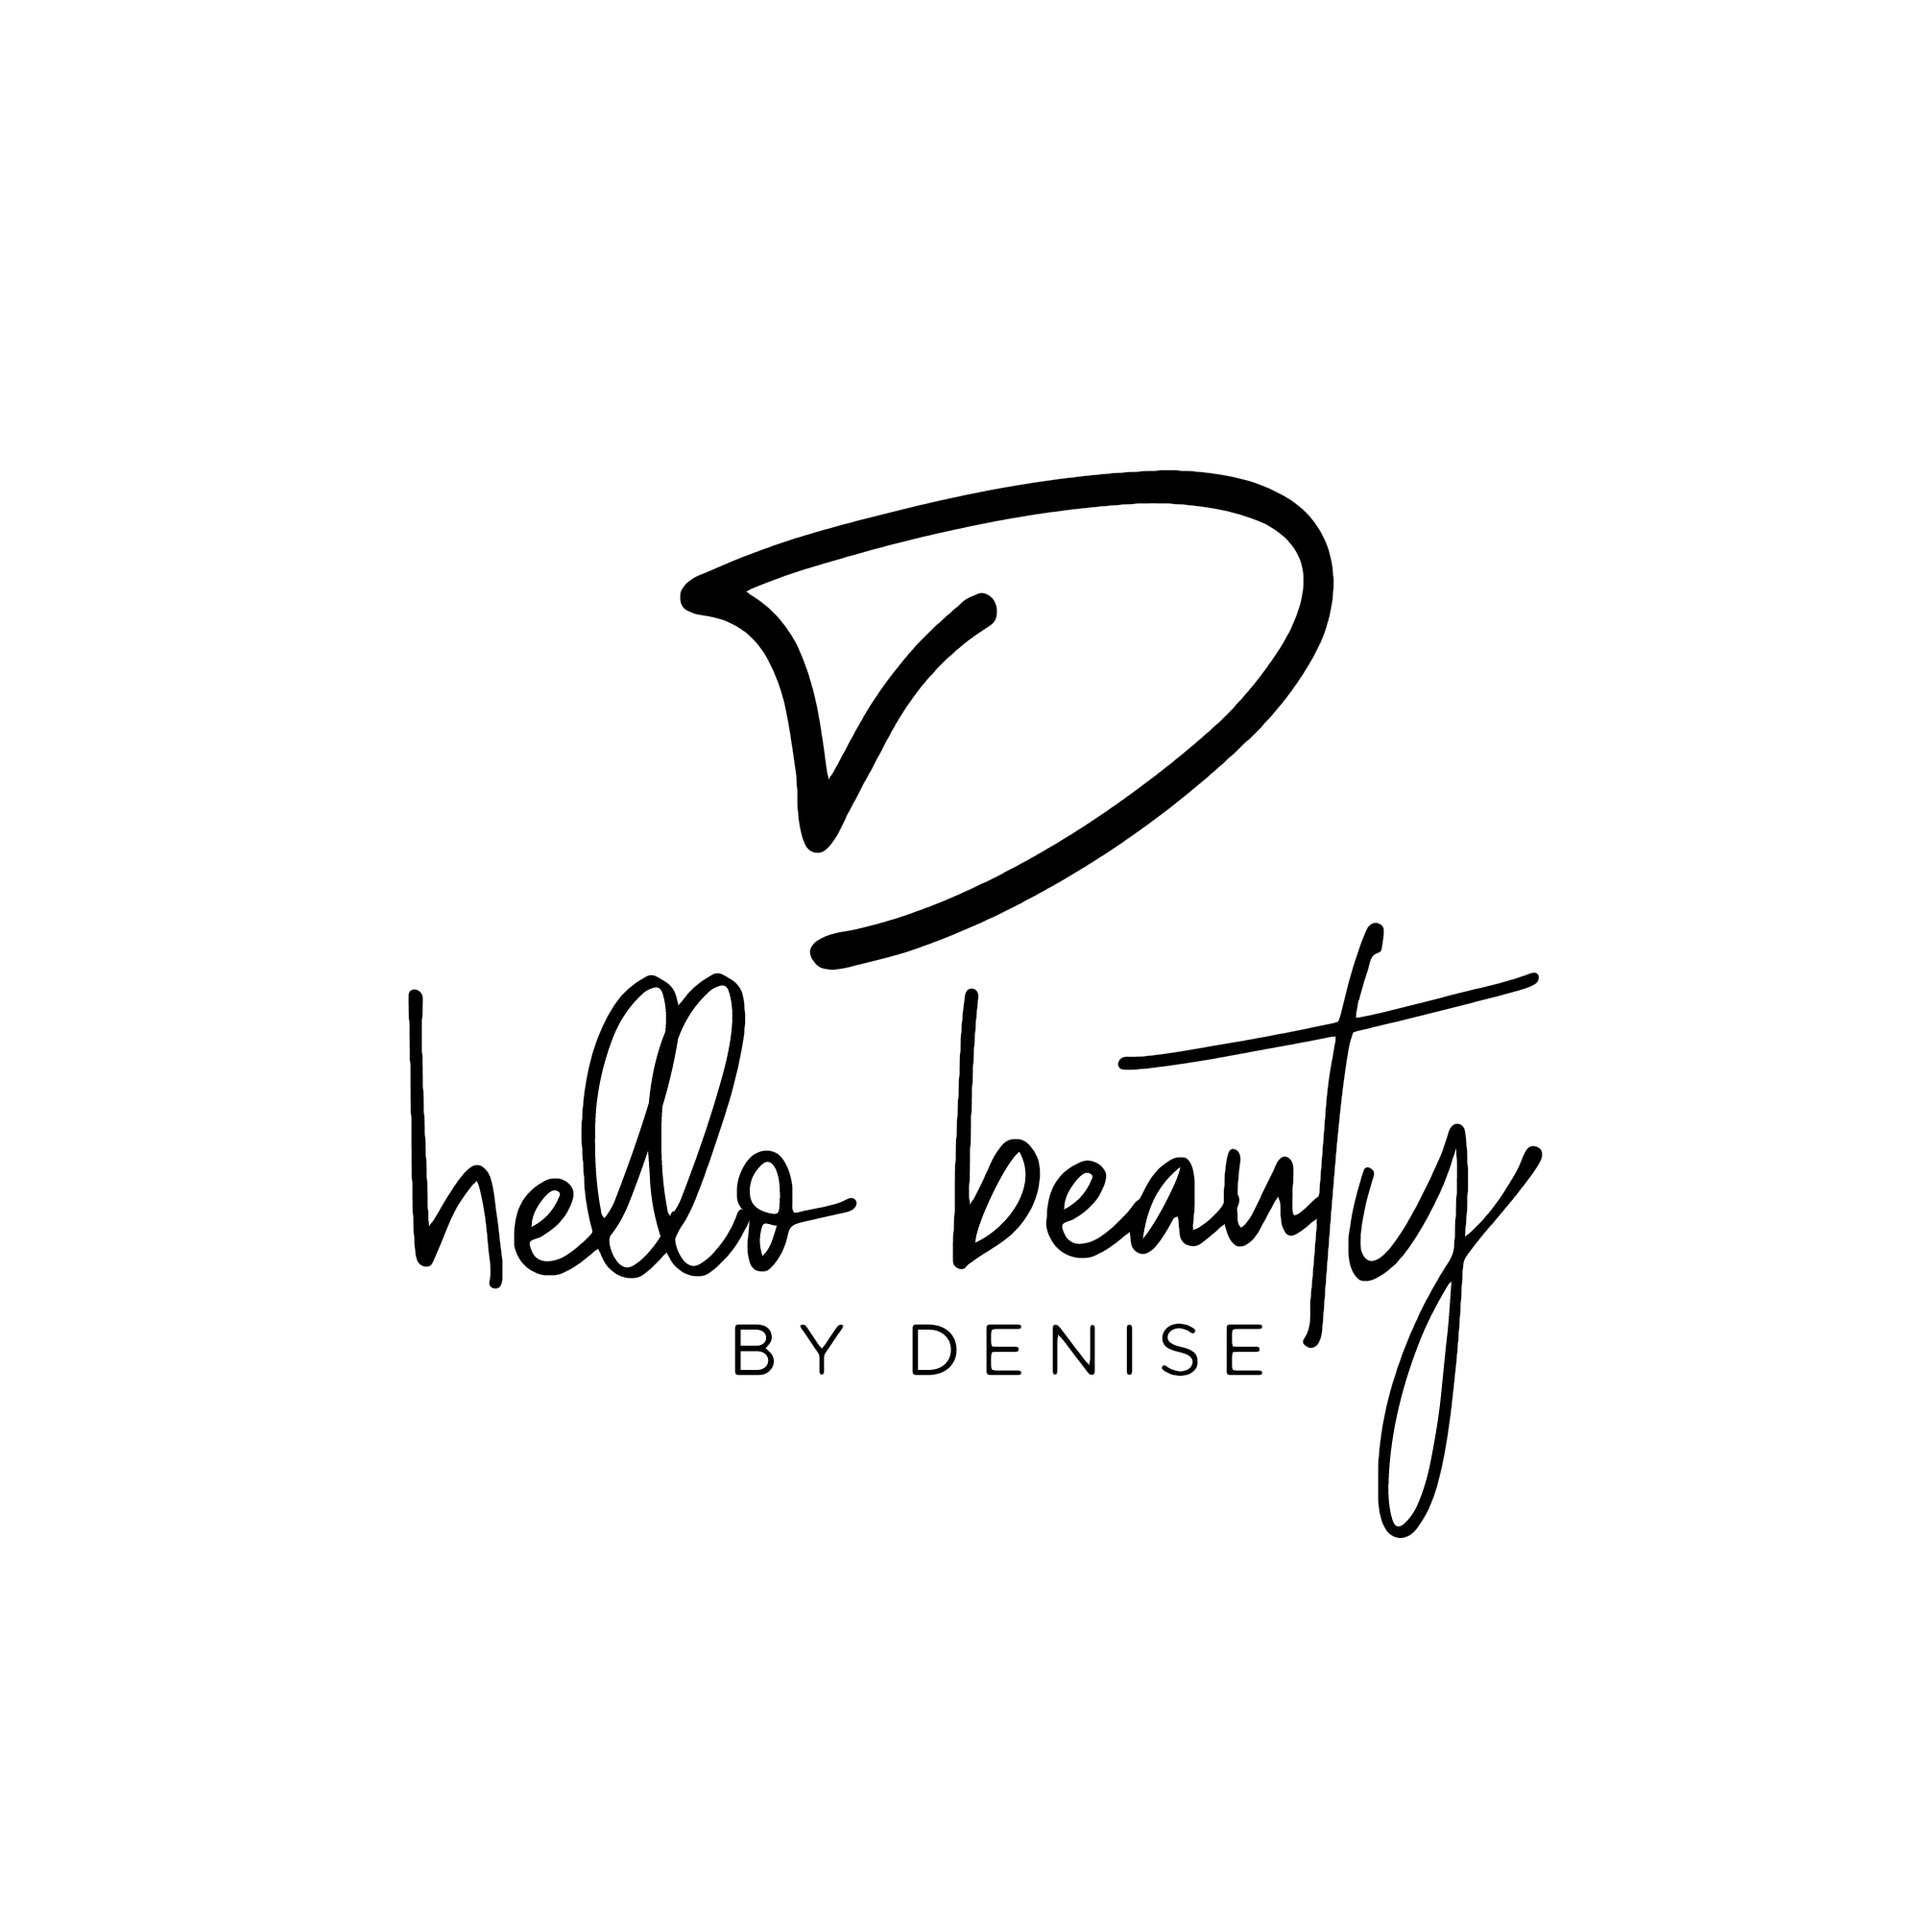 (c) Hellobeautybydenise.com